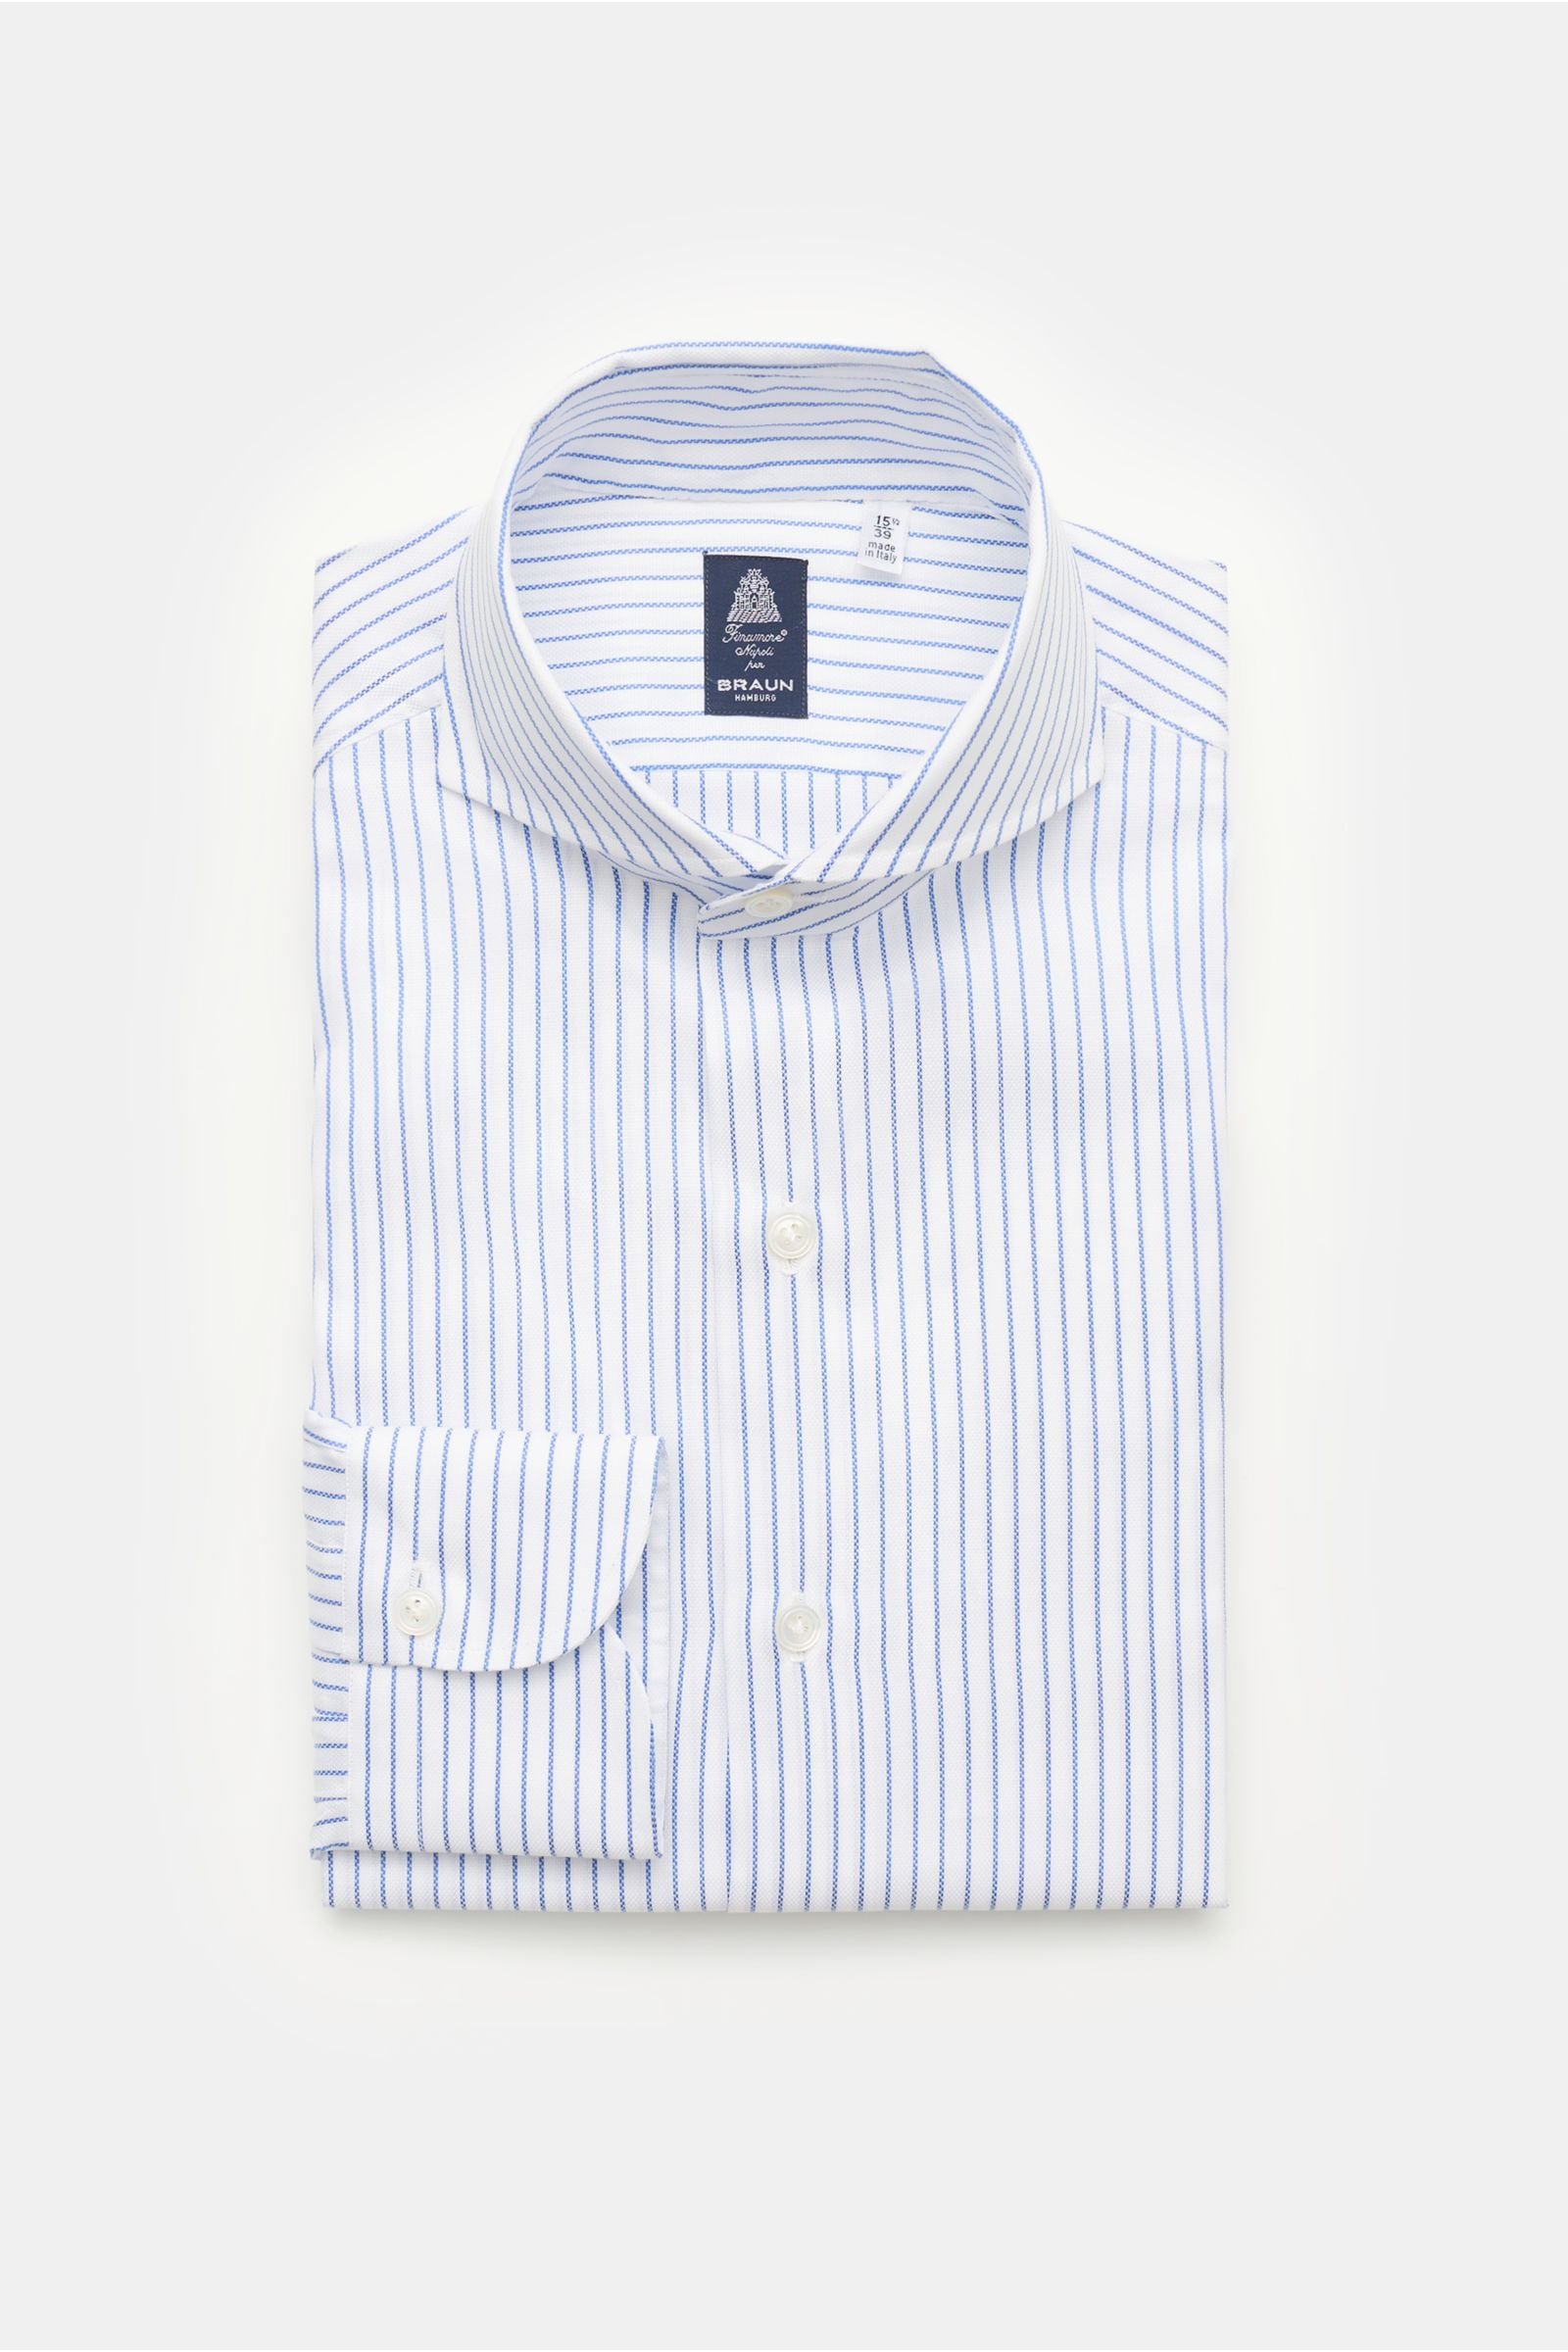 Oxford shirt 'Sergio Napoli' shark collar grey-blue/white striped